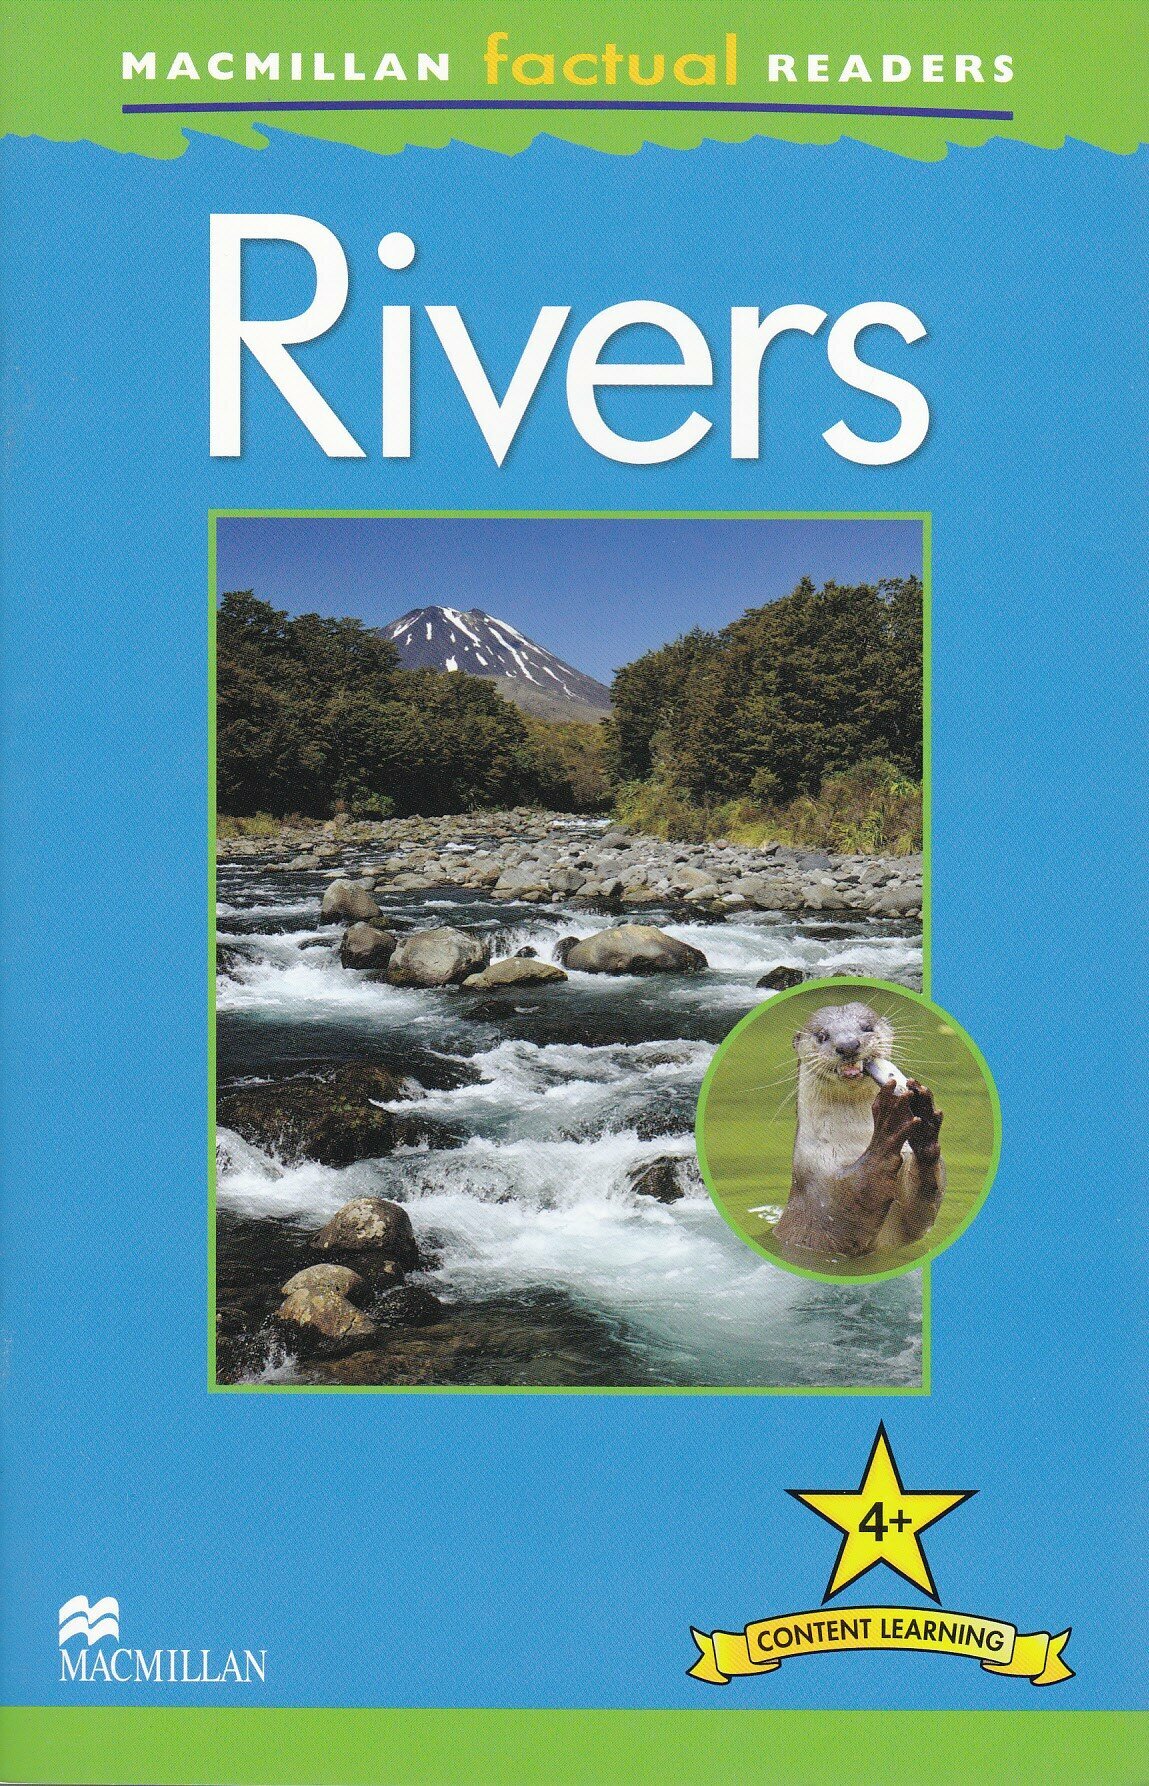 Macmillan Factual Reader: Rivers